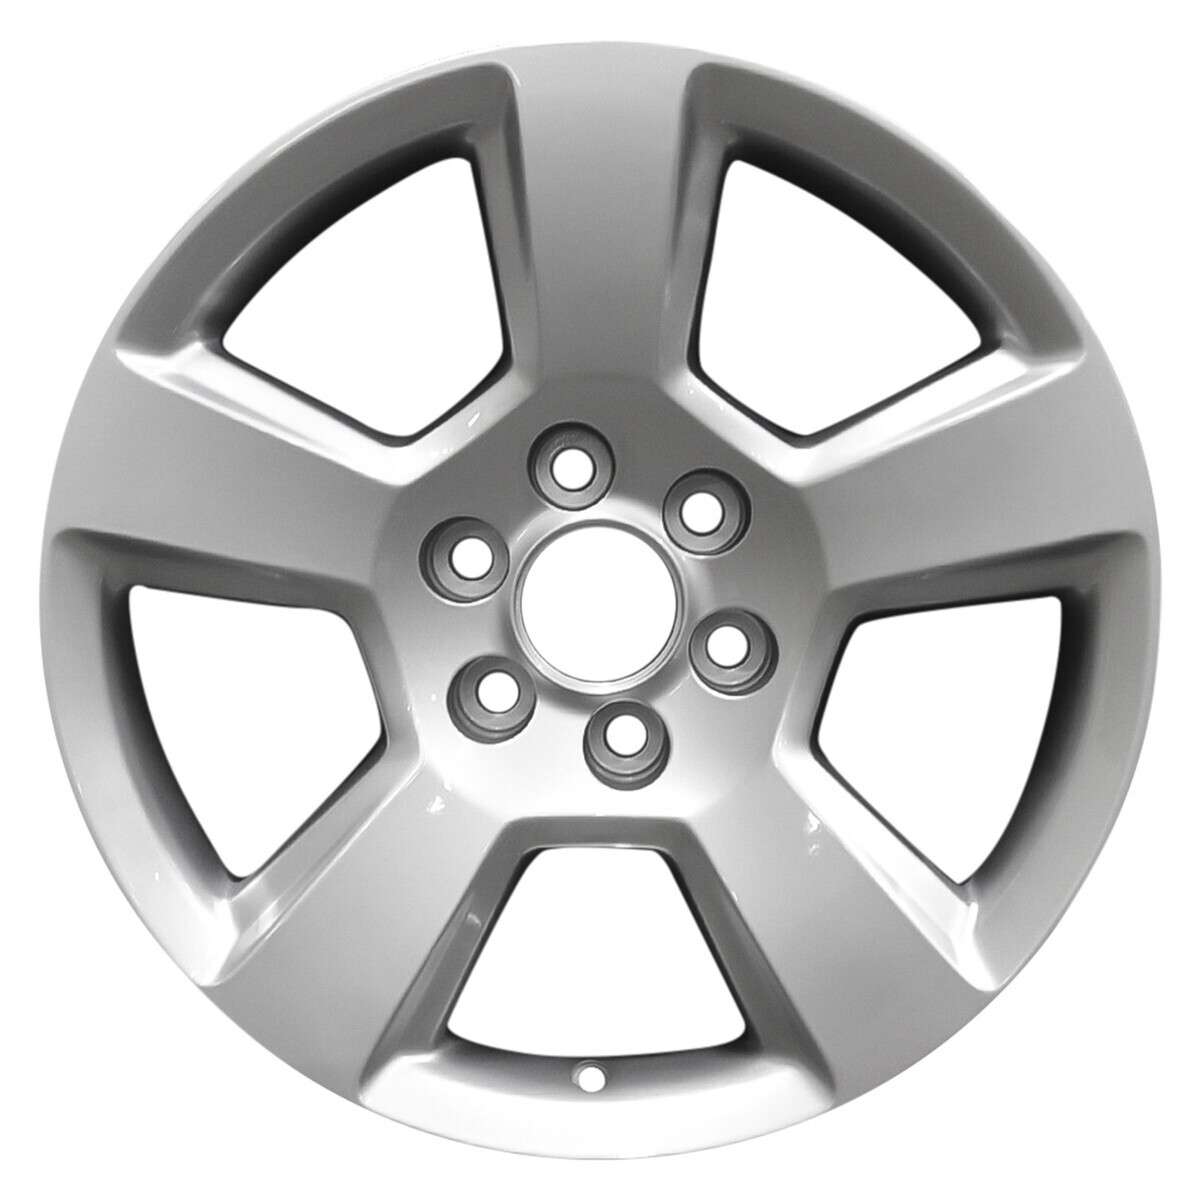 2019 Chevrolet Suburban 1500 New 20" Replacement Wheel Rim RW5754S